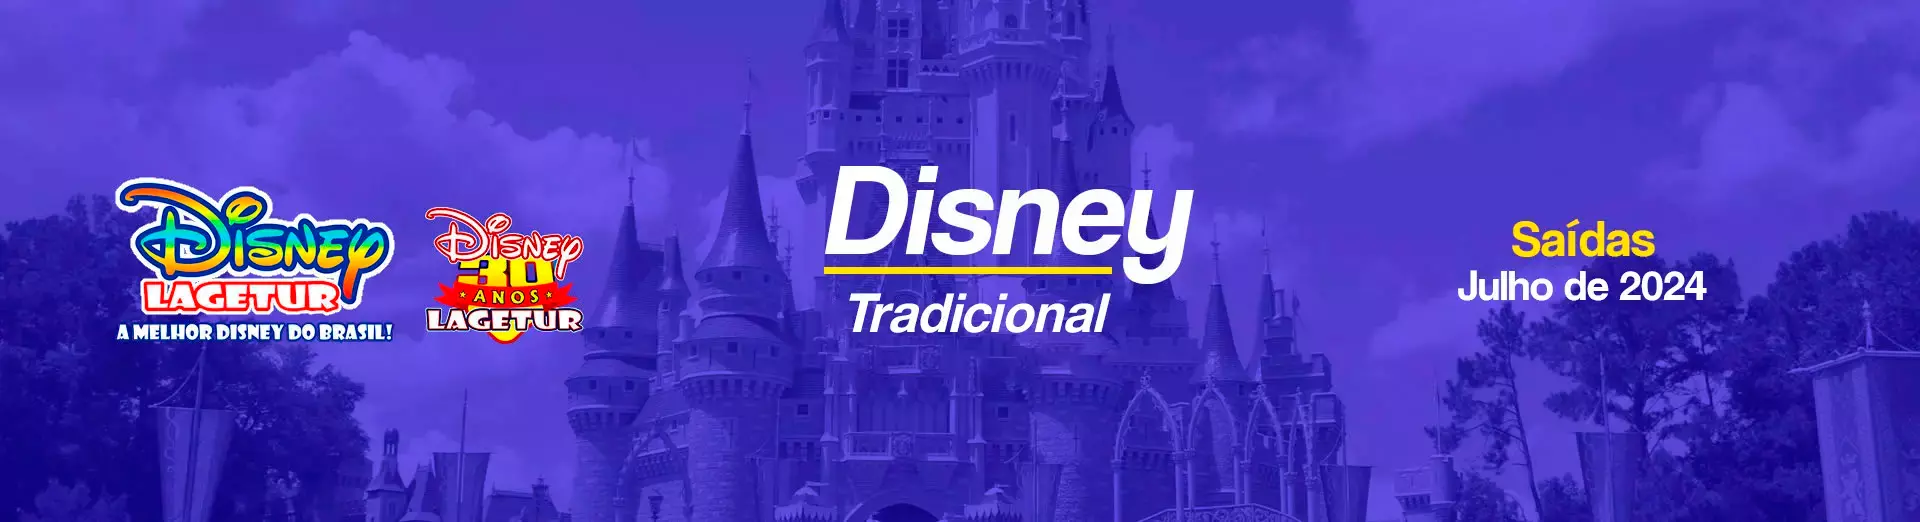 Disney Tradicional Julho 2024